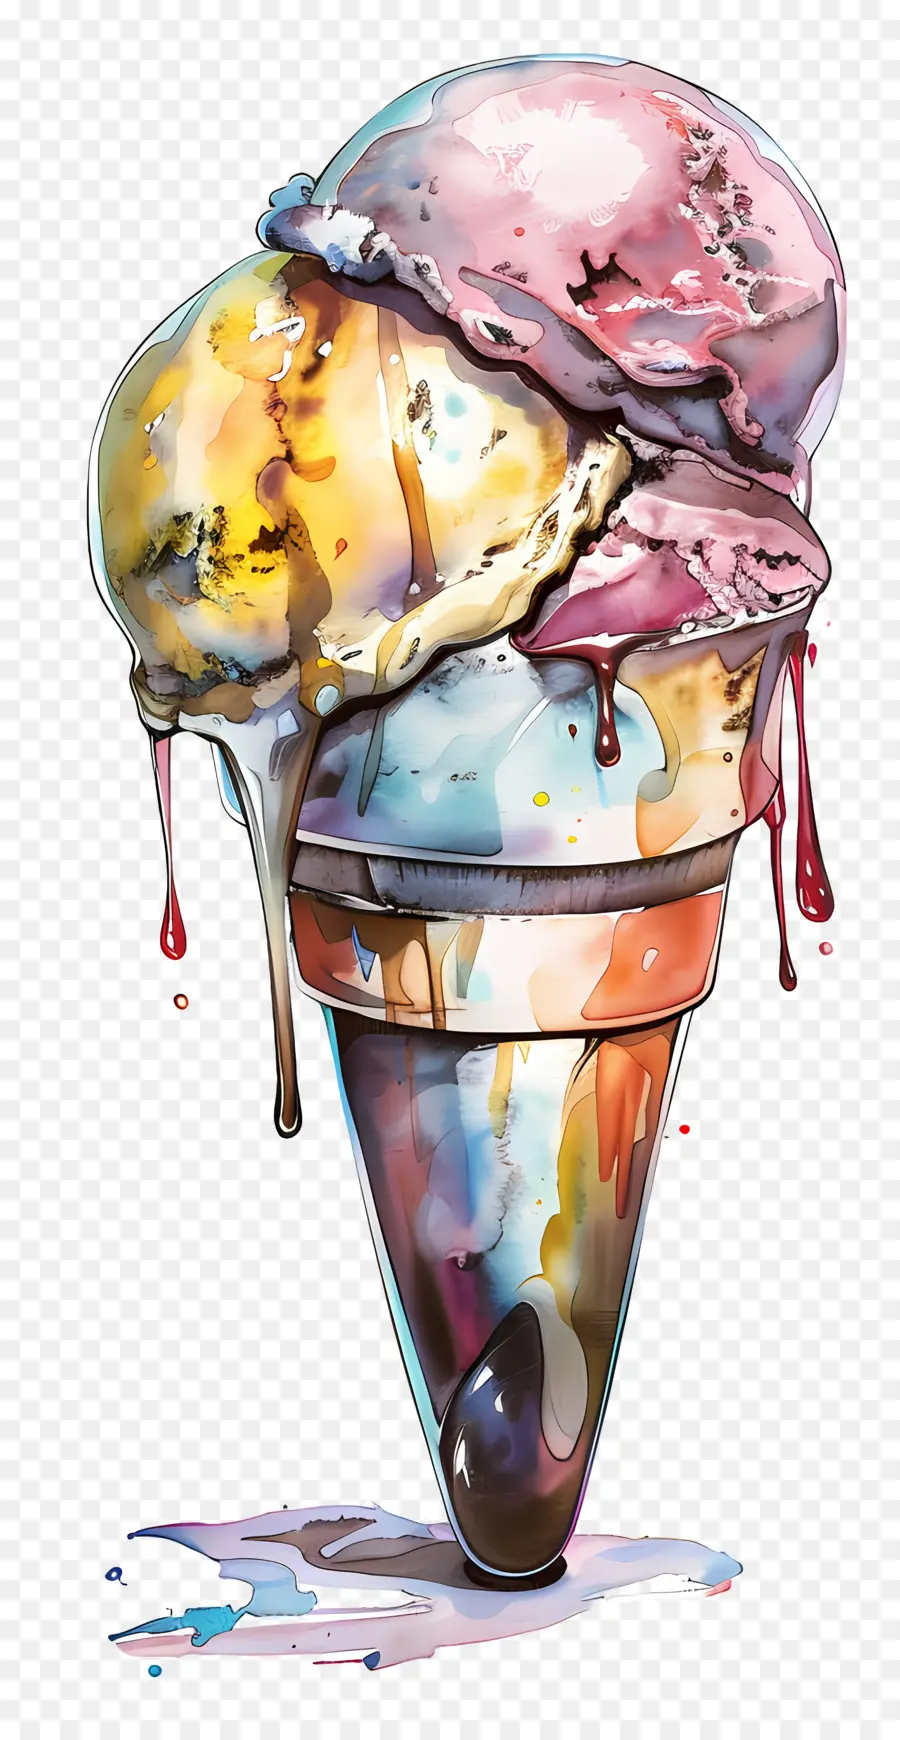 scoop ice cream watercolor painting ice cream cone swirl colors